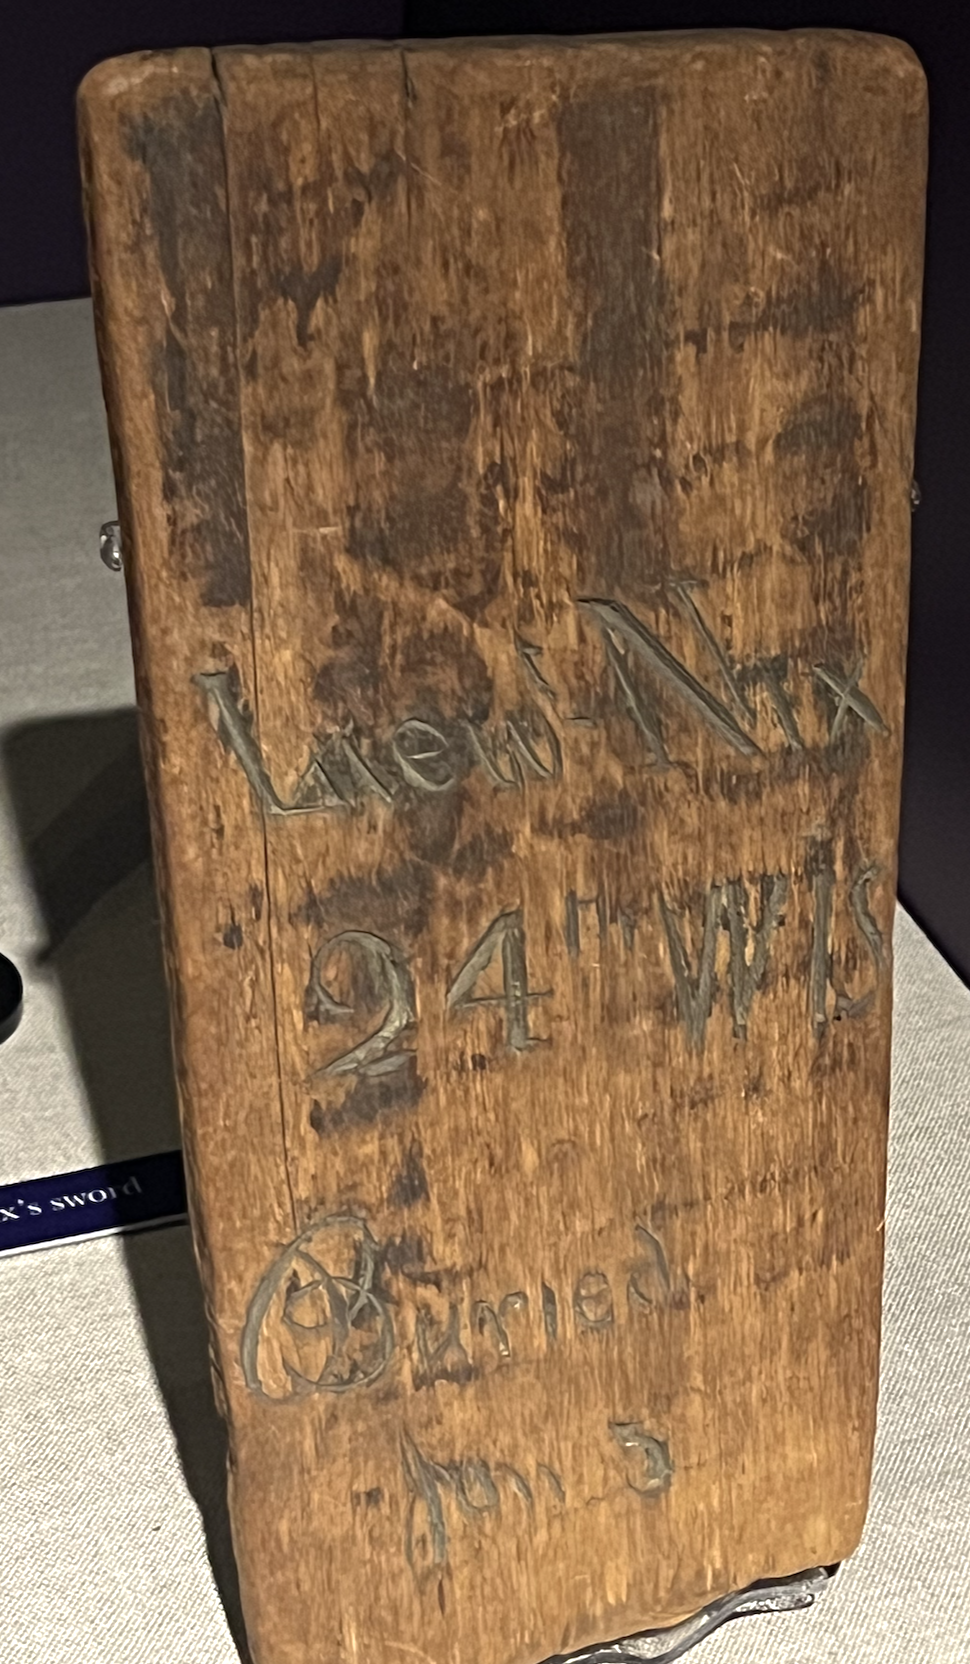 Original wooden board to honor Lieutenant Nix, 24th Wisconsin Infantry, Stones River Battlefield